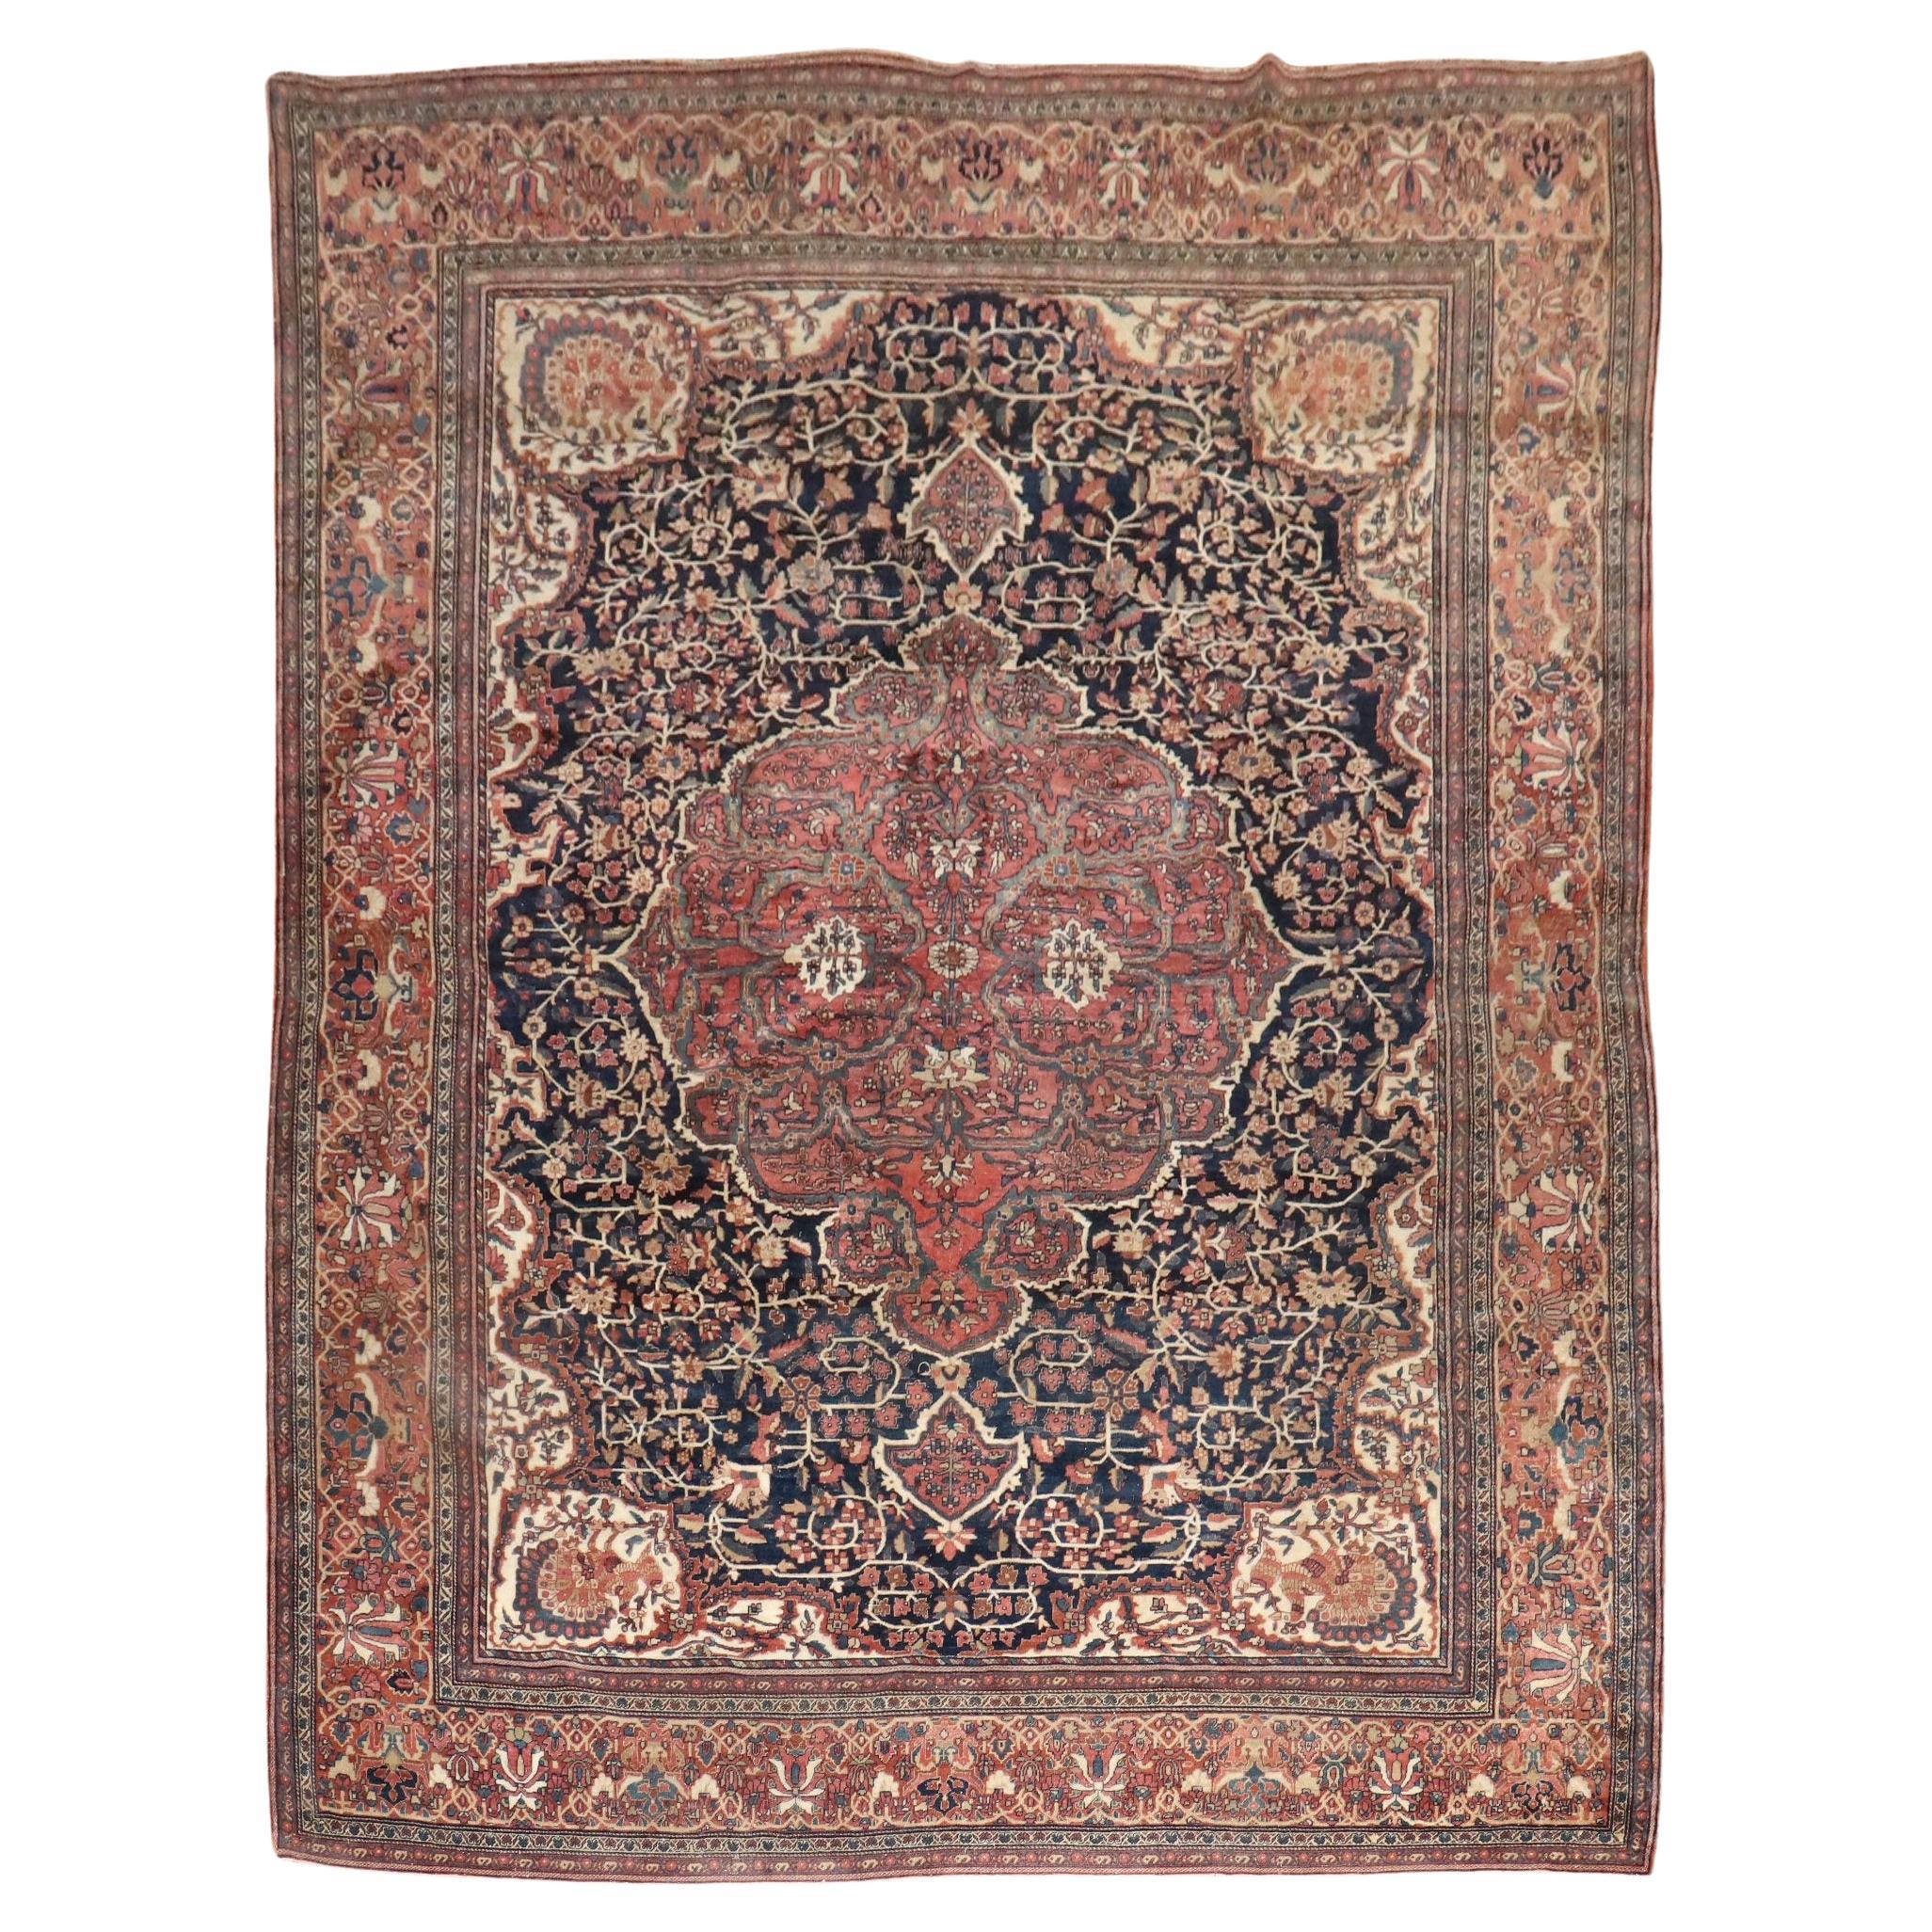 Zabihi Kollektion Persischer Sarouk Ferehan-Teppich aus dem 19. Jahrhundert